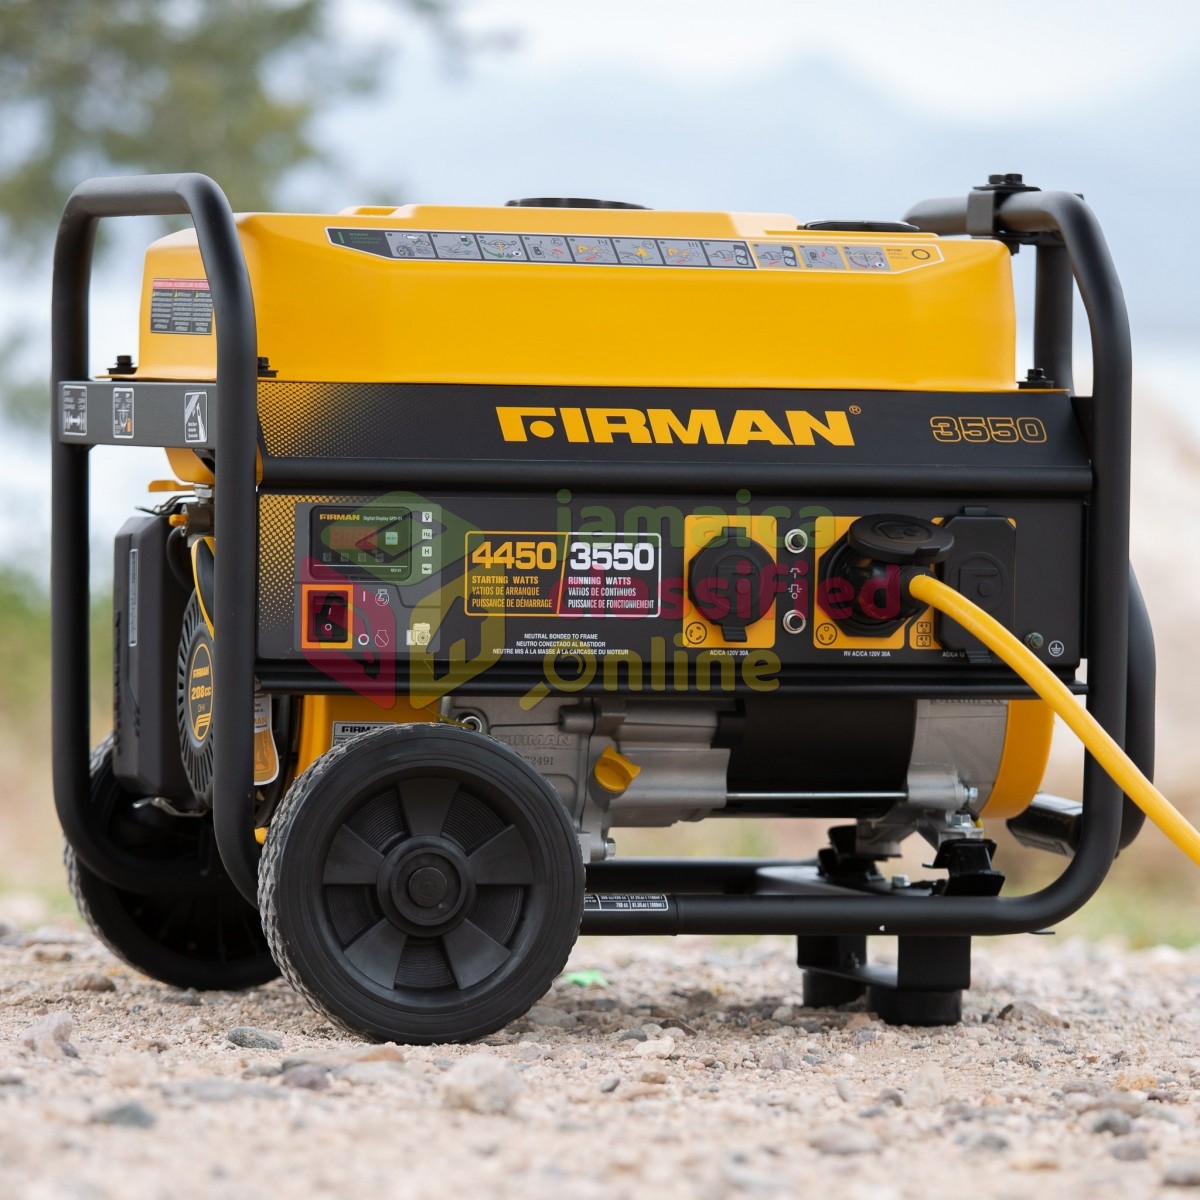 New Portable Generator | FIRMAN P03501 | 4450 Watt for sale in Old .